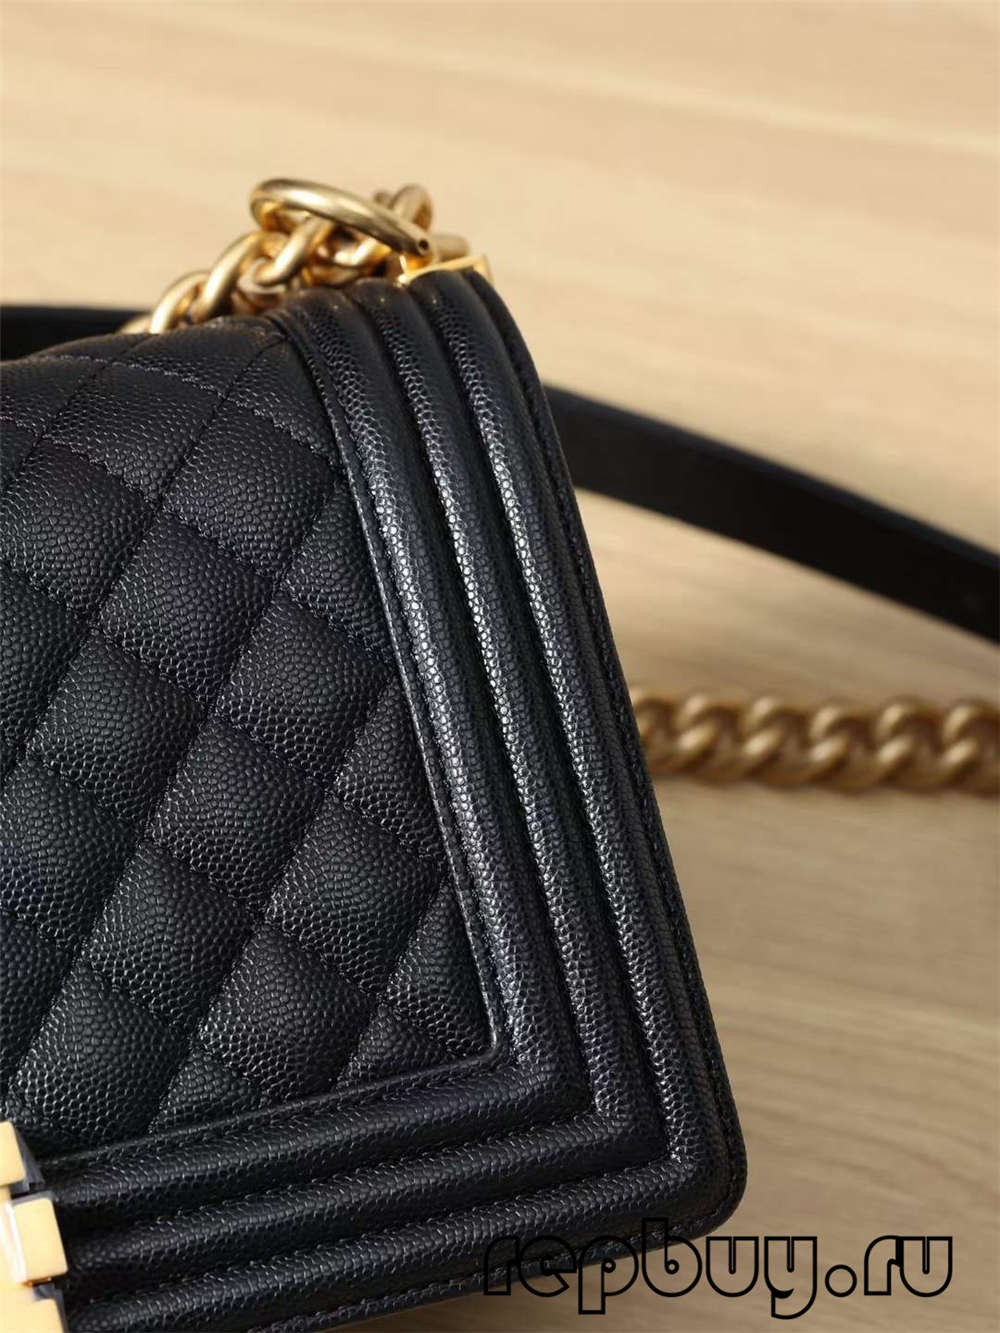 Chanel Le boy medium gold buckle top replica handbags Hardware details (2022 Latest)-Best Quality Fake designer Bag Review, Replica designer bag ru